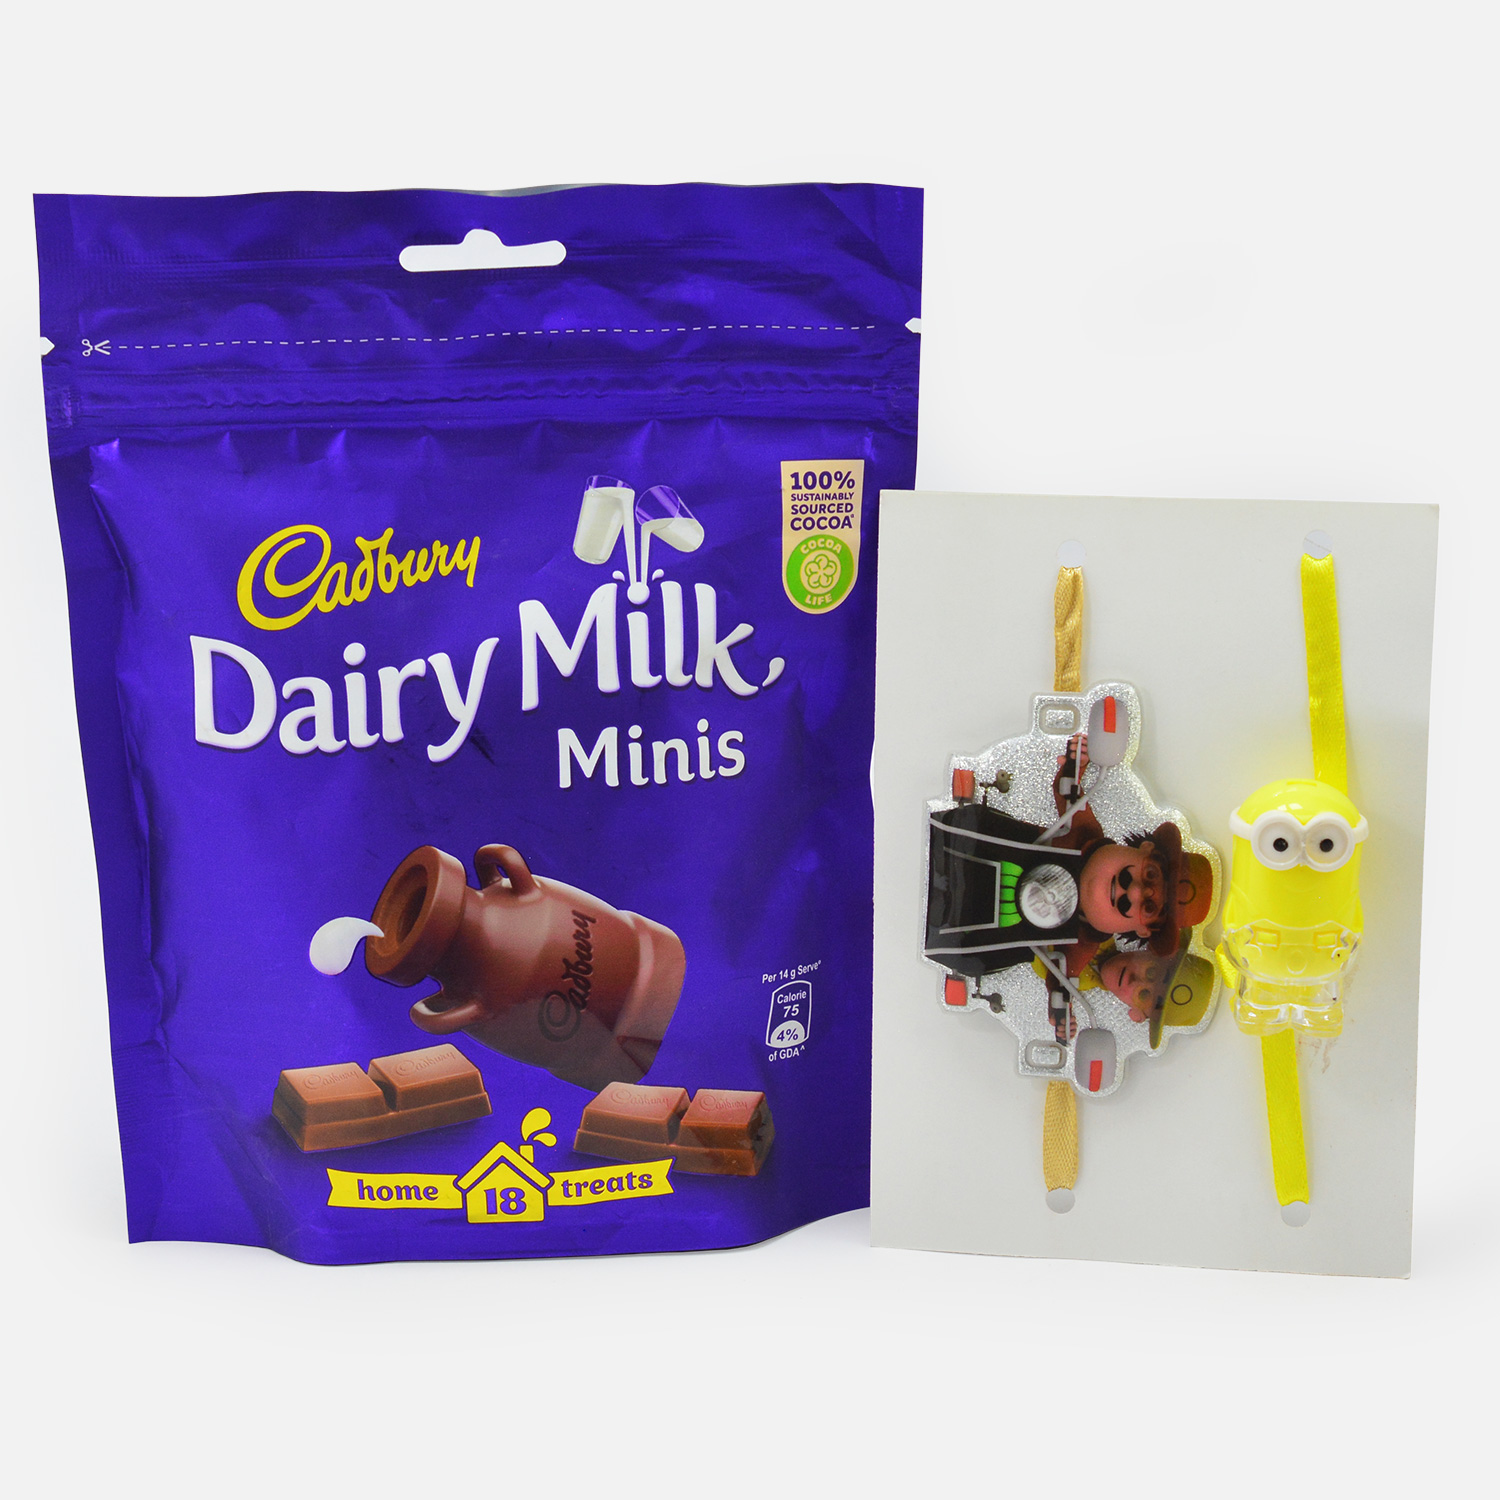 Cadbury Dairy Milk Minis Chocolates Pack with Two Kids Rakhis